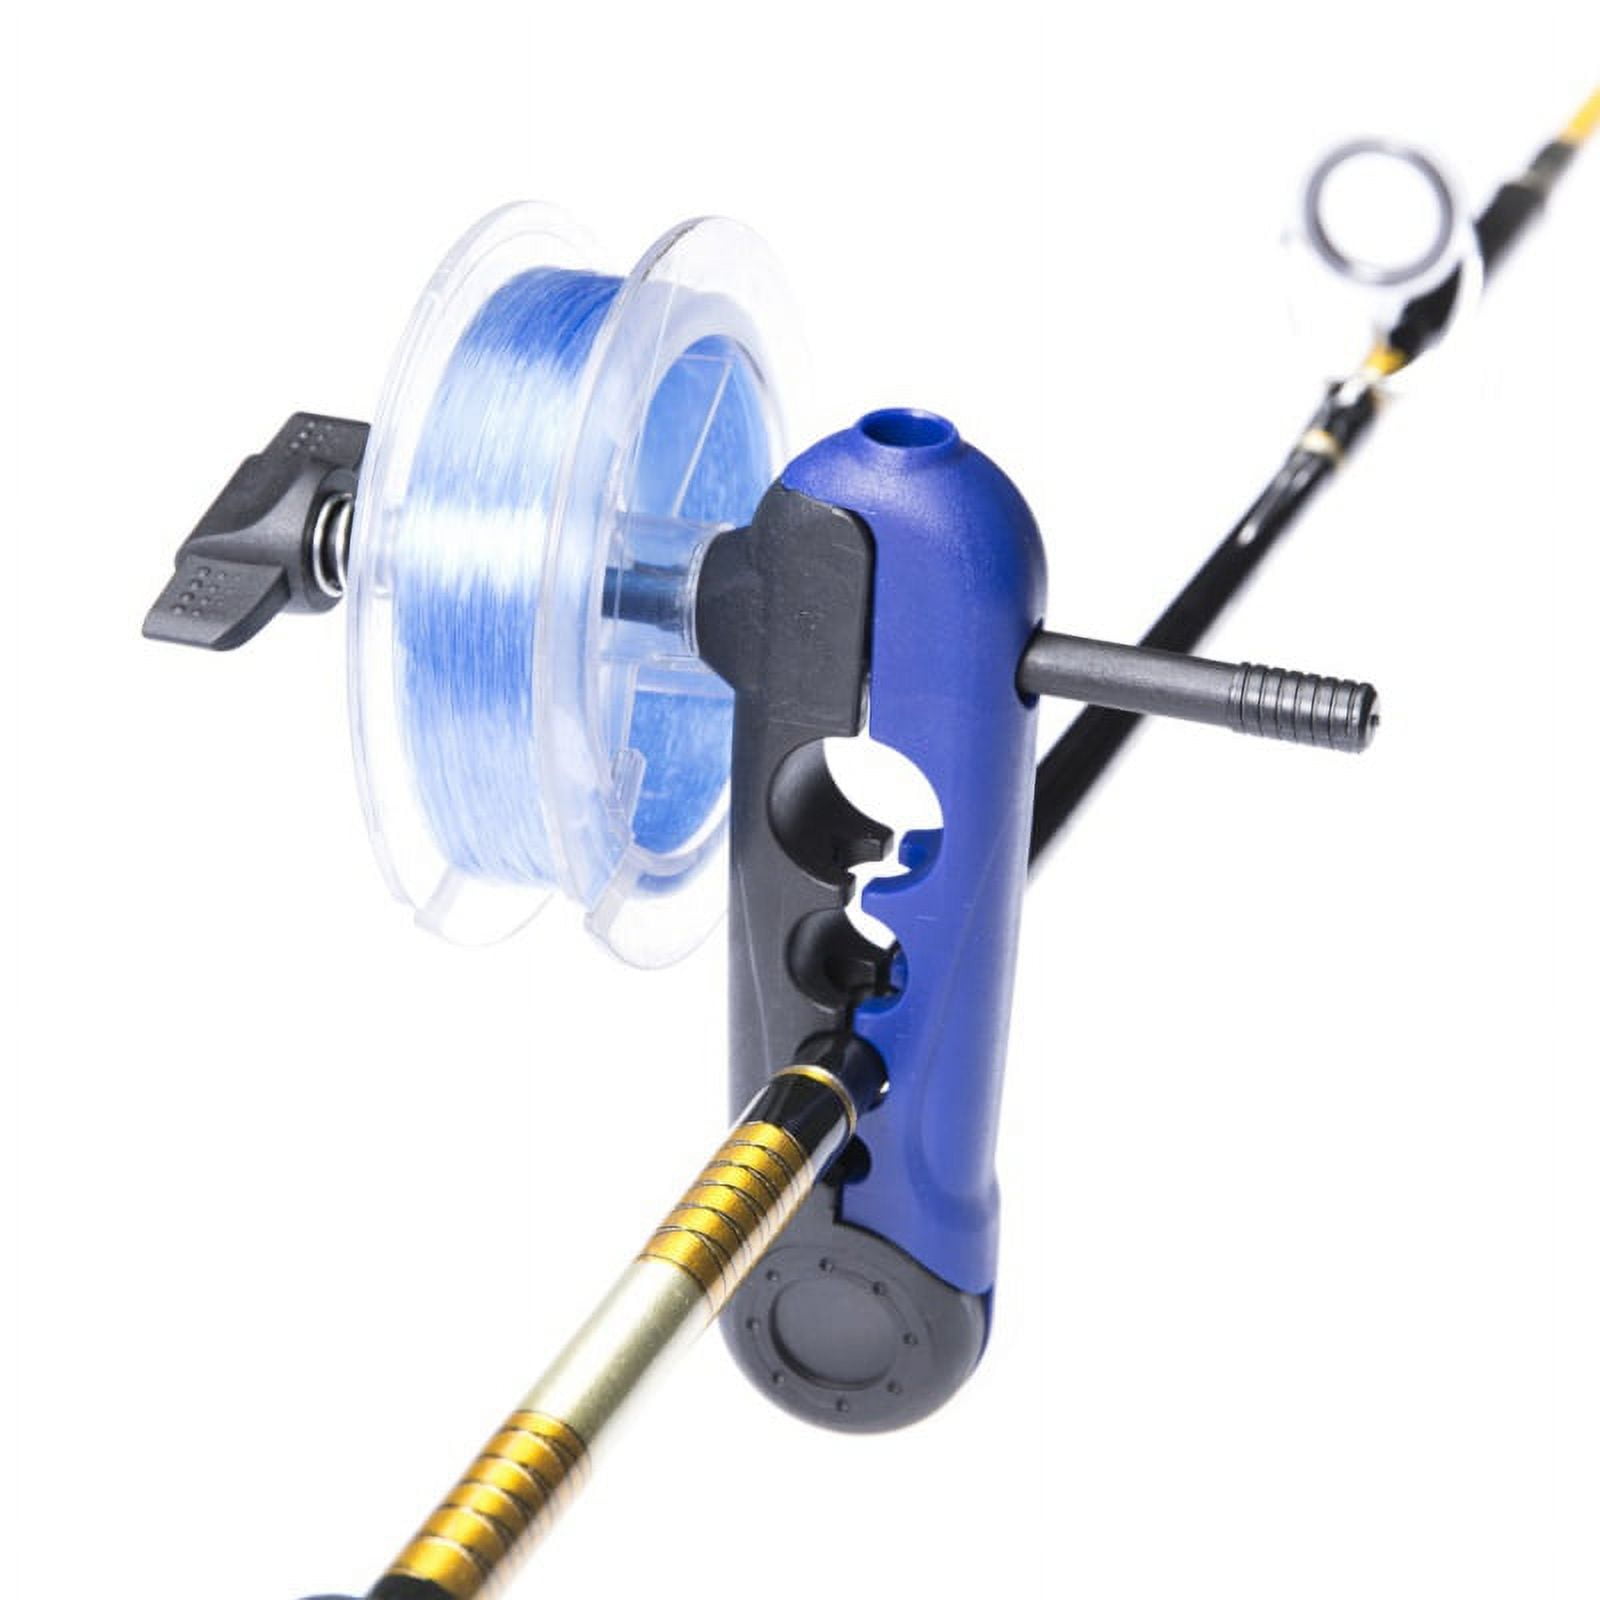 Portable Universal Fishing Line Spooler Adjustable for Various